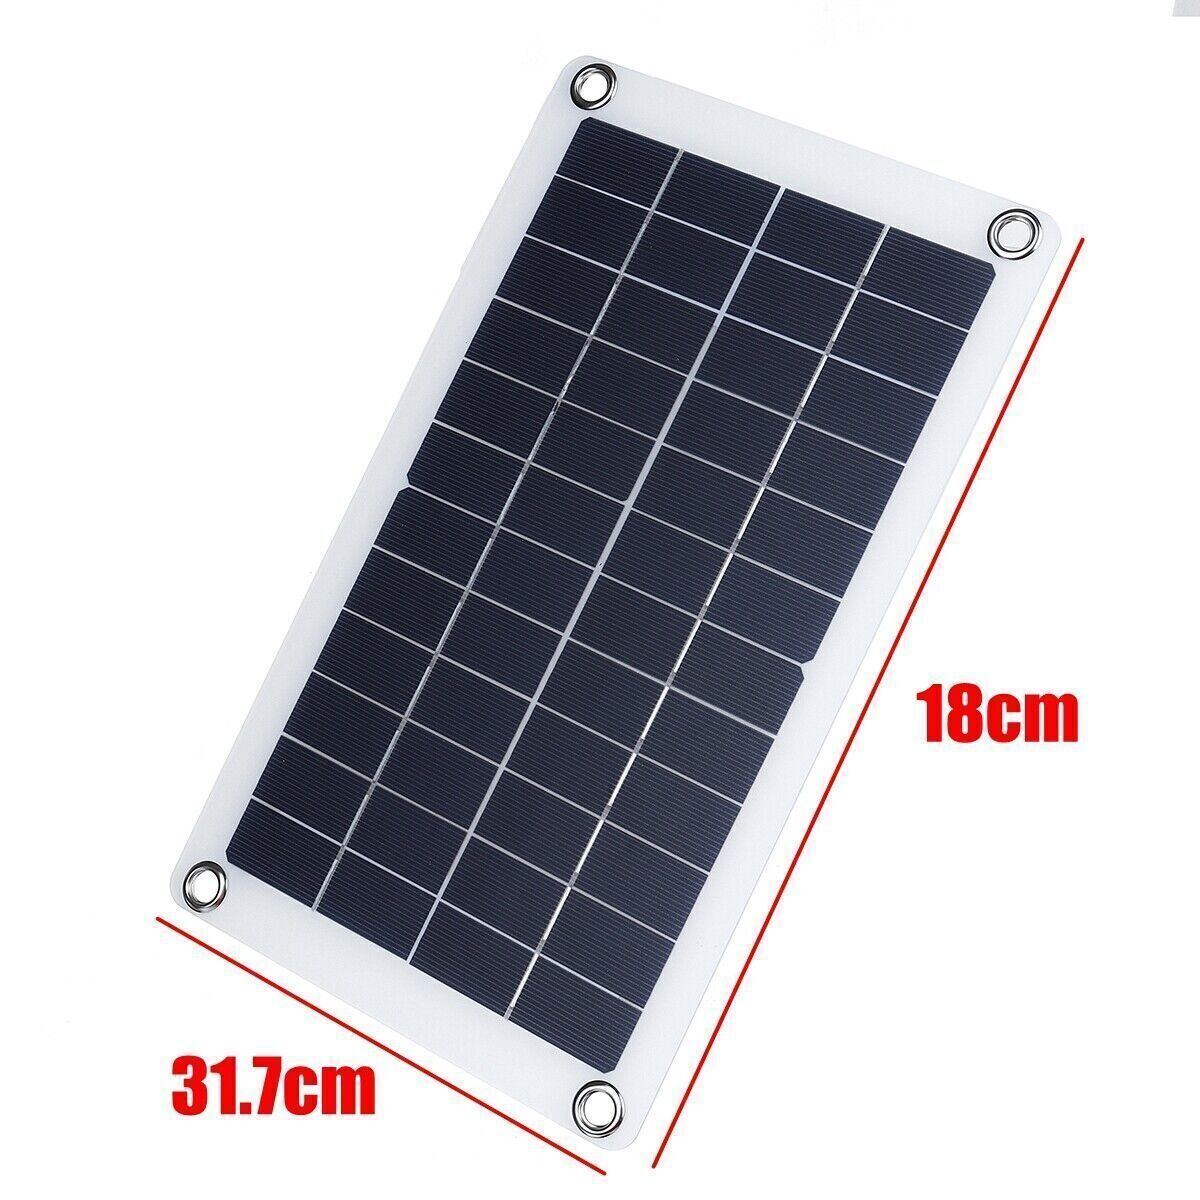 DSBsolar Outdoor 15W12V Solar Panel By PAIDU